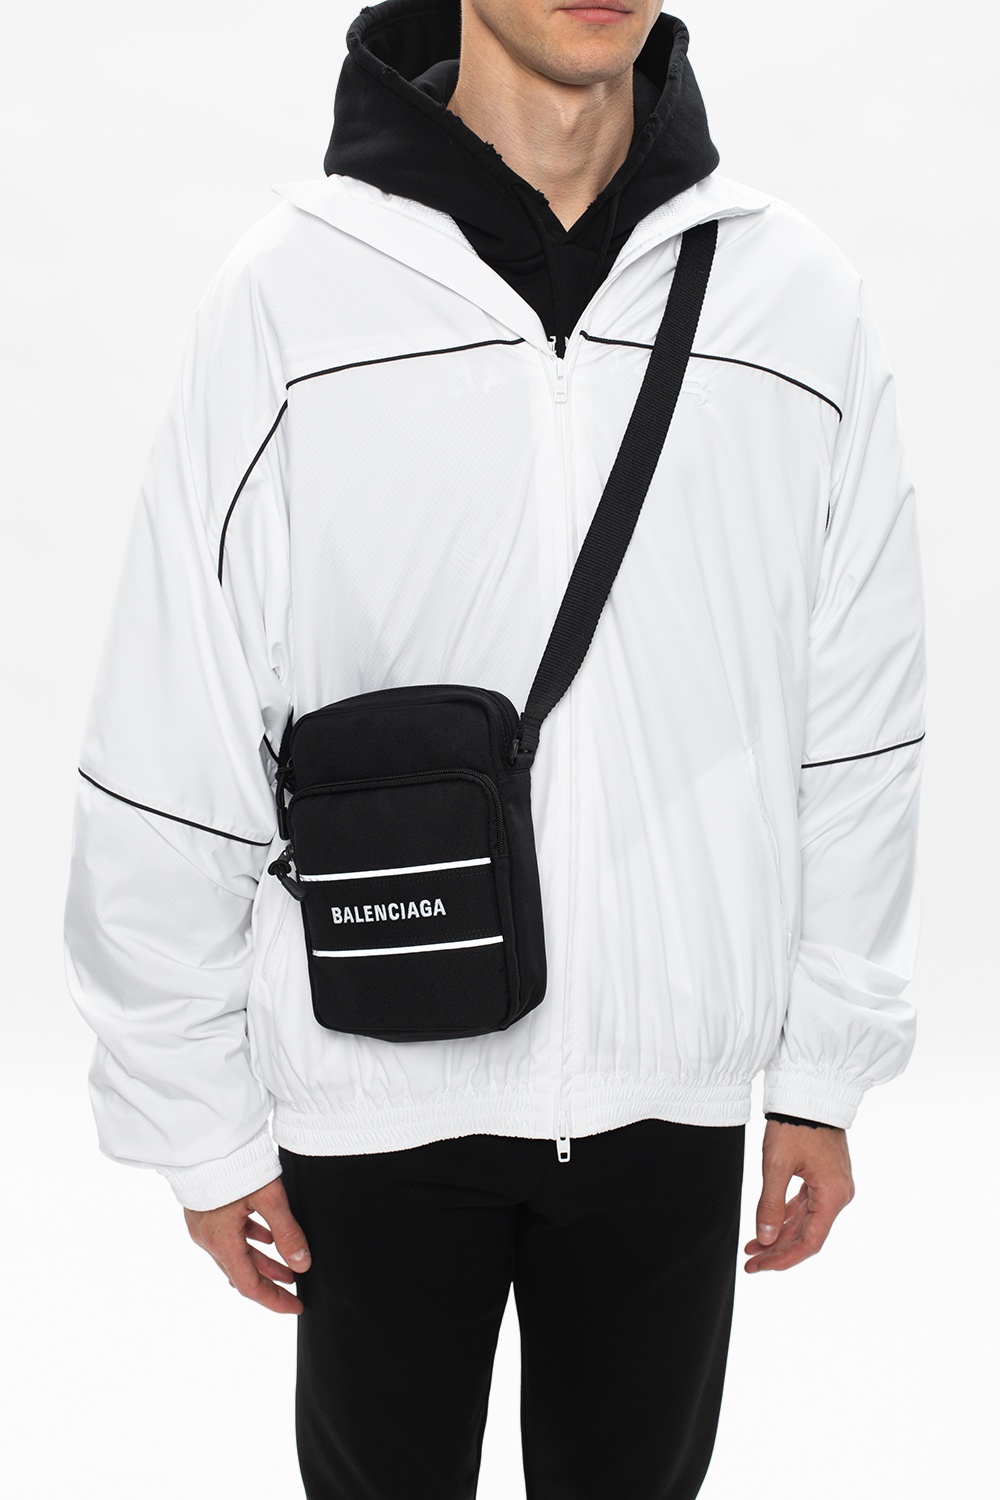 Balenciaga mens messenger bag Mens Fashion Bags Sling Bags on Carousell